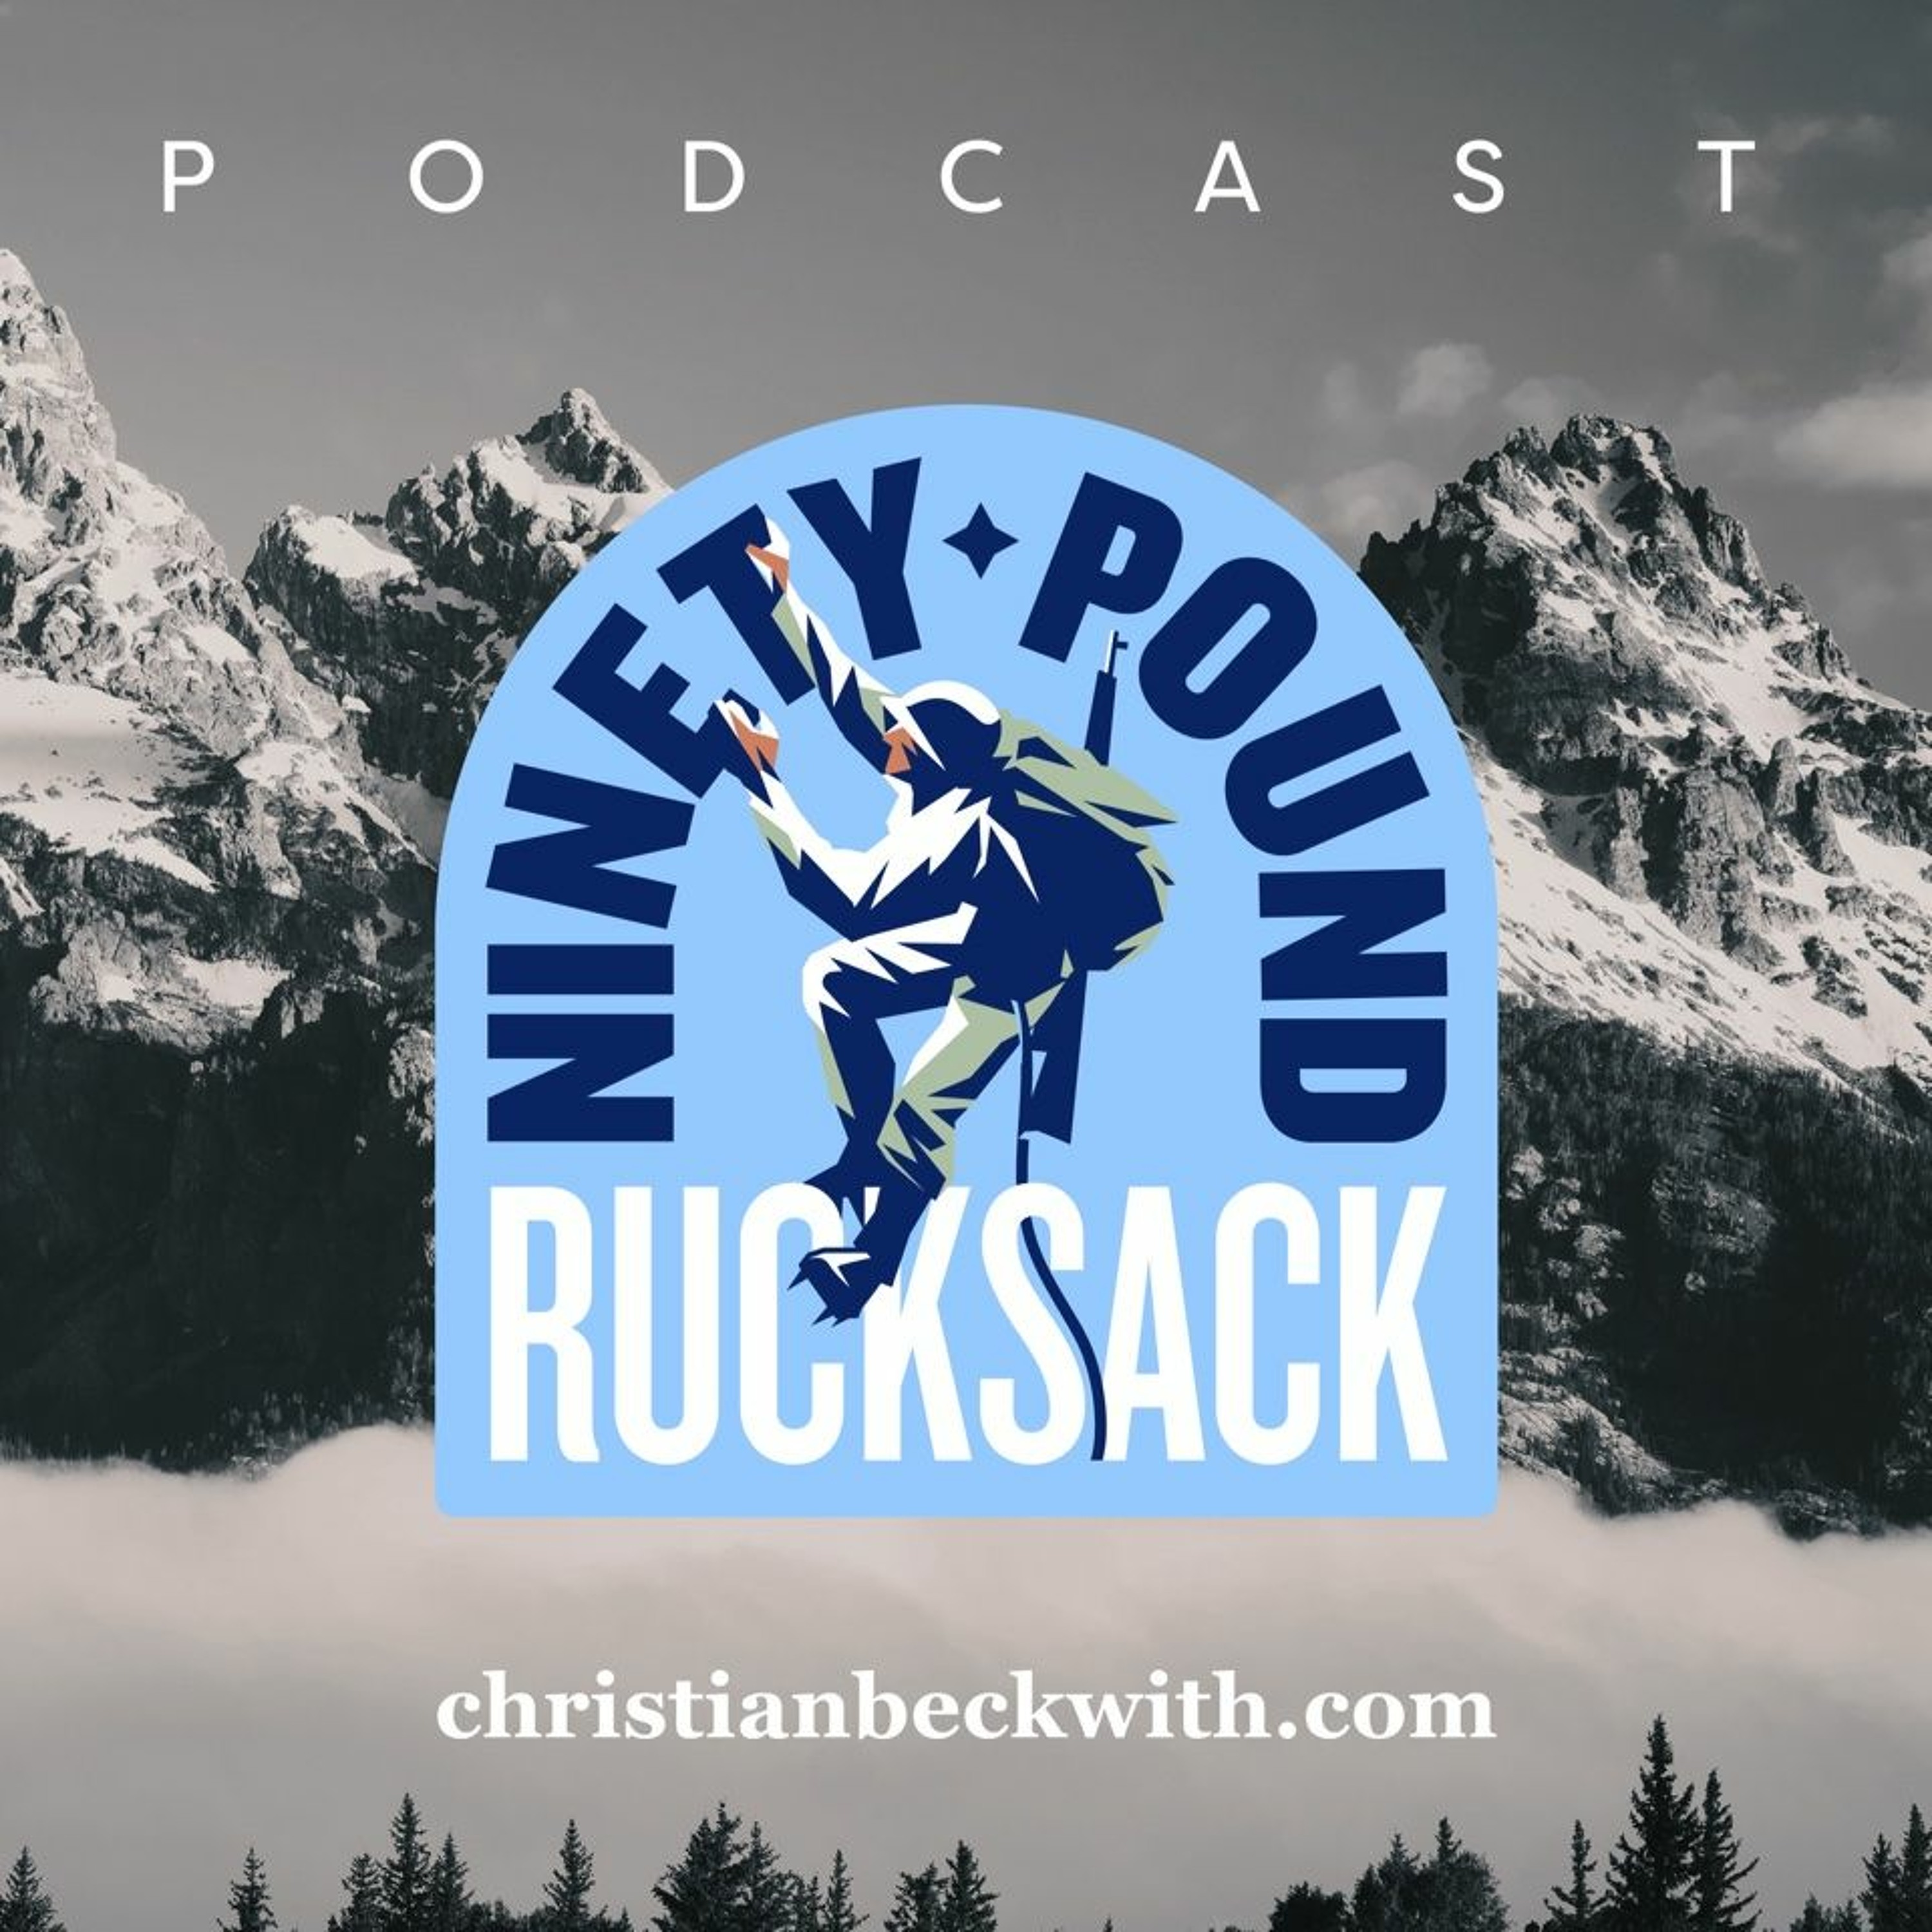 BONUS Episode 001! The 90lb Rucksack - Christian Beckwith